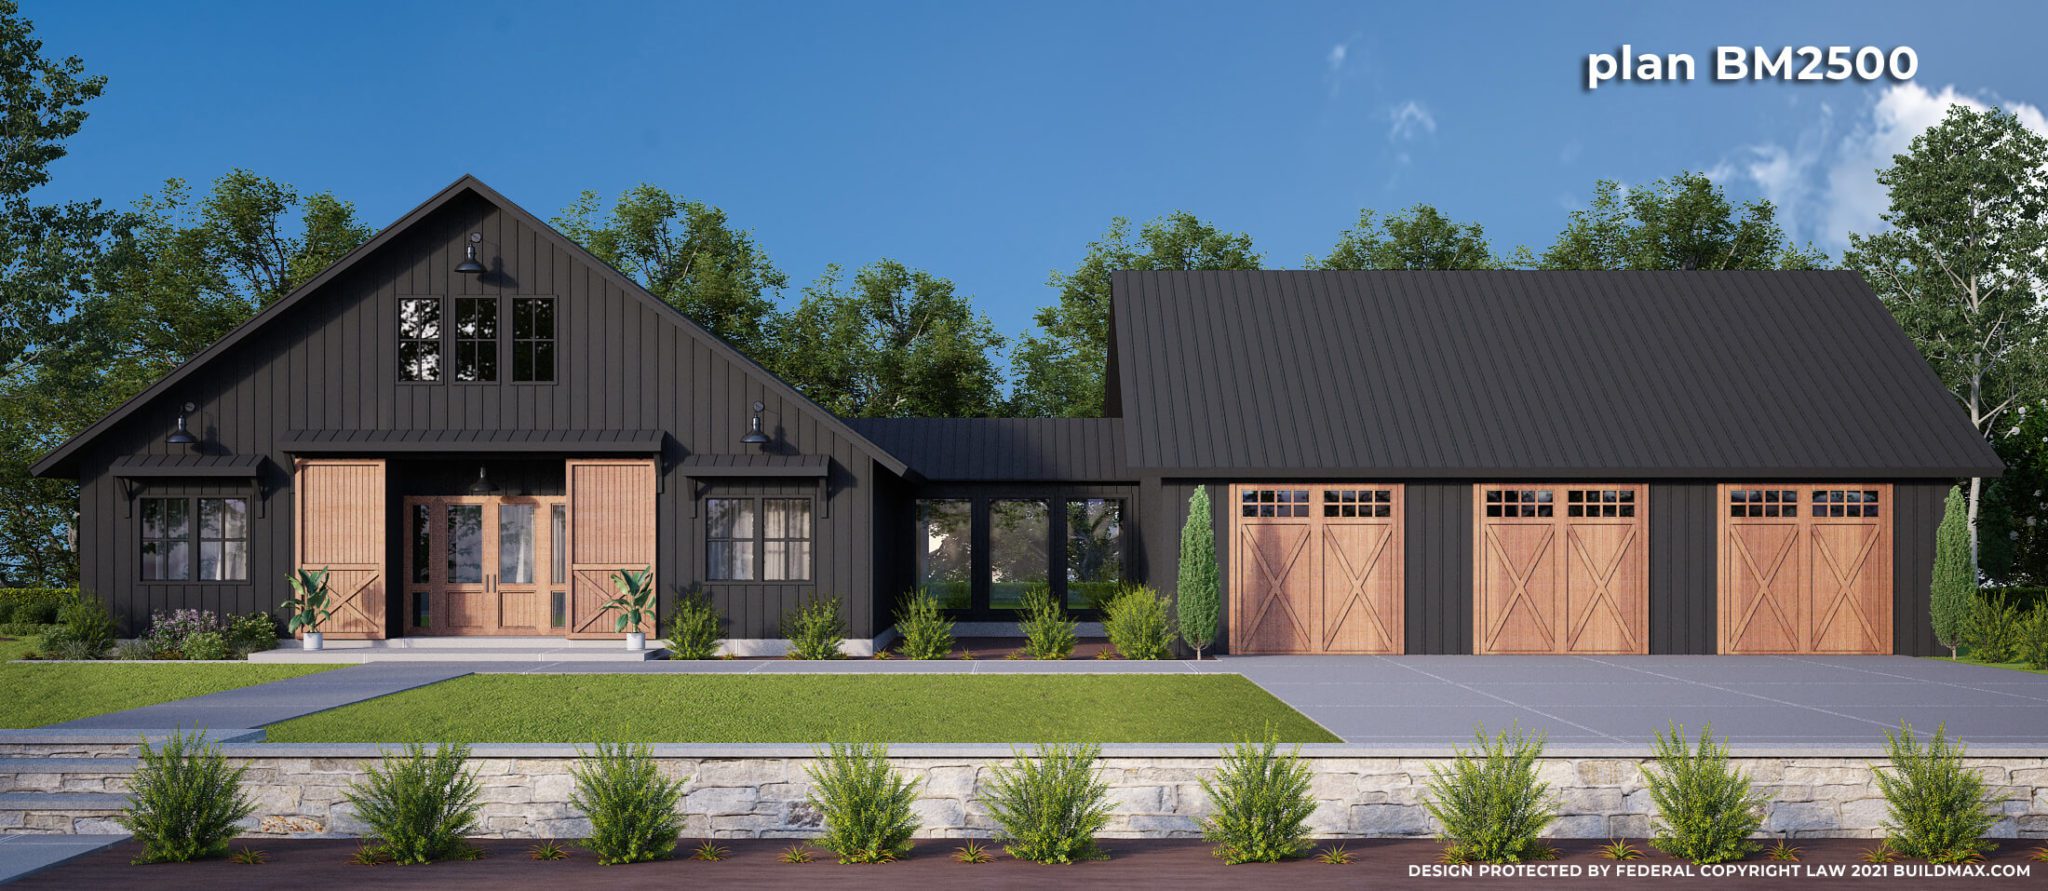 Black barndominium style house plan with 2 car garage